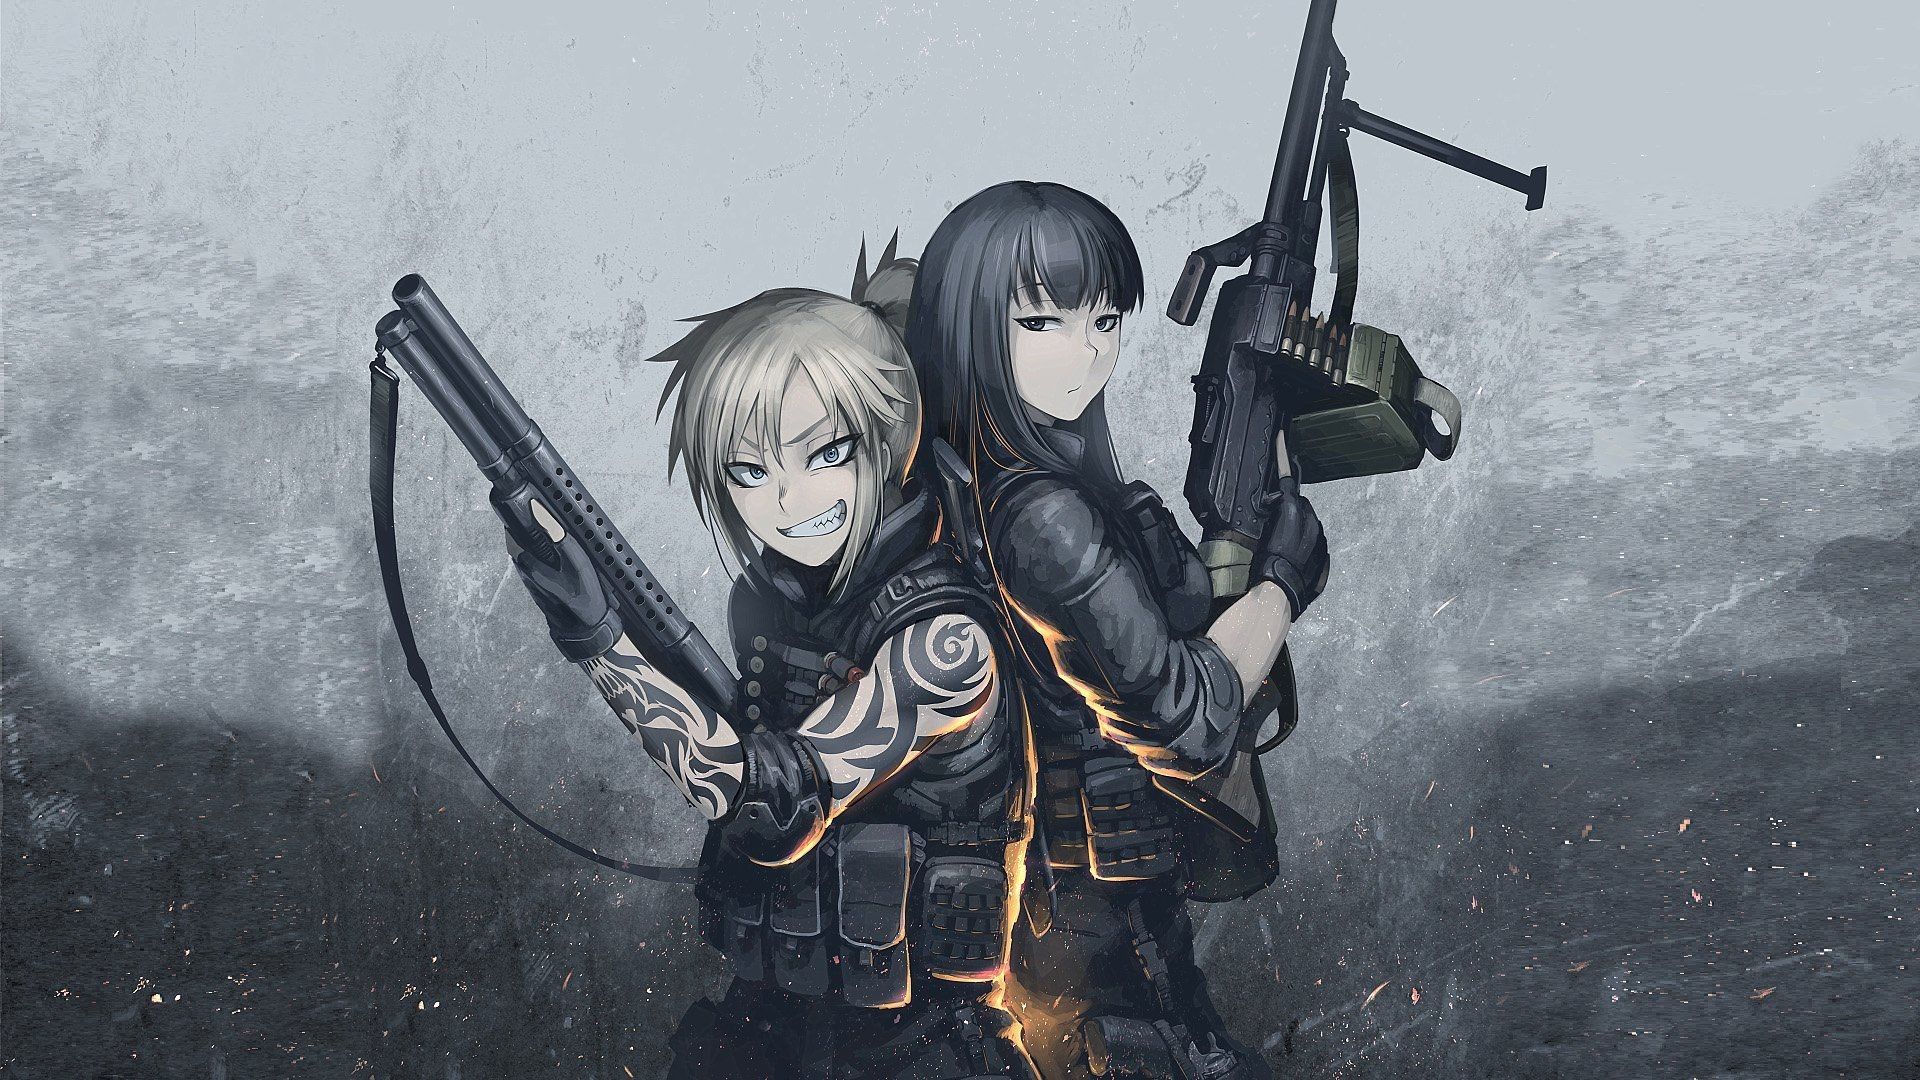 Download wallpaper 1366x768 cute soldiers anime girls artwork original  tablet laptop 1366x768 hd background 17091